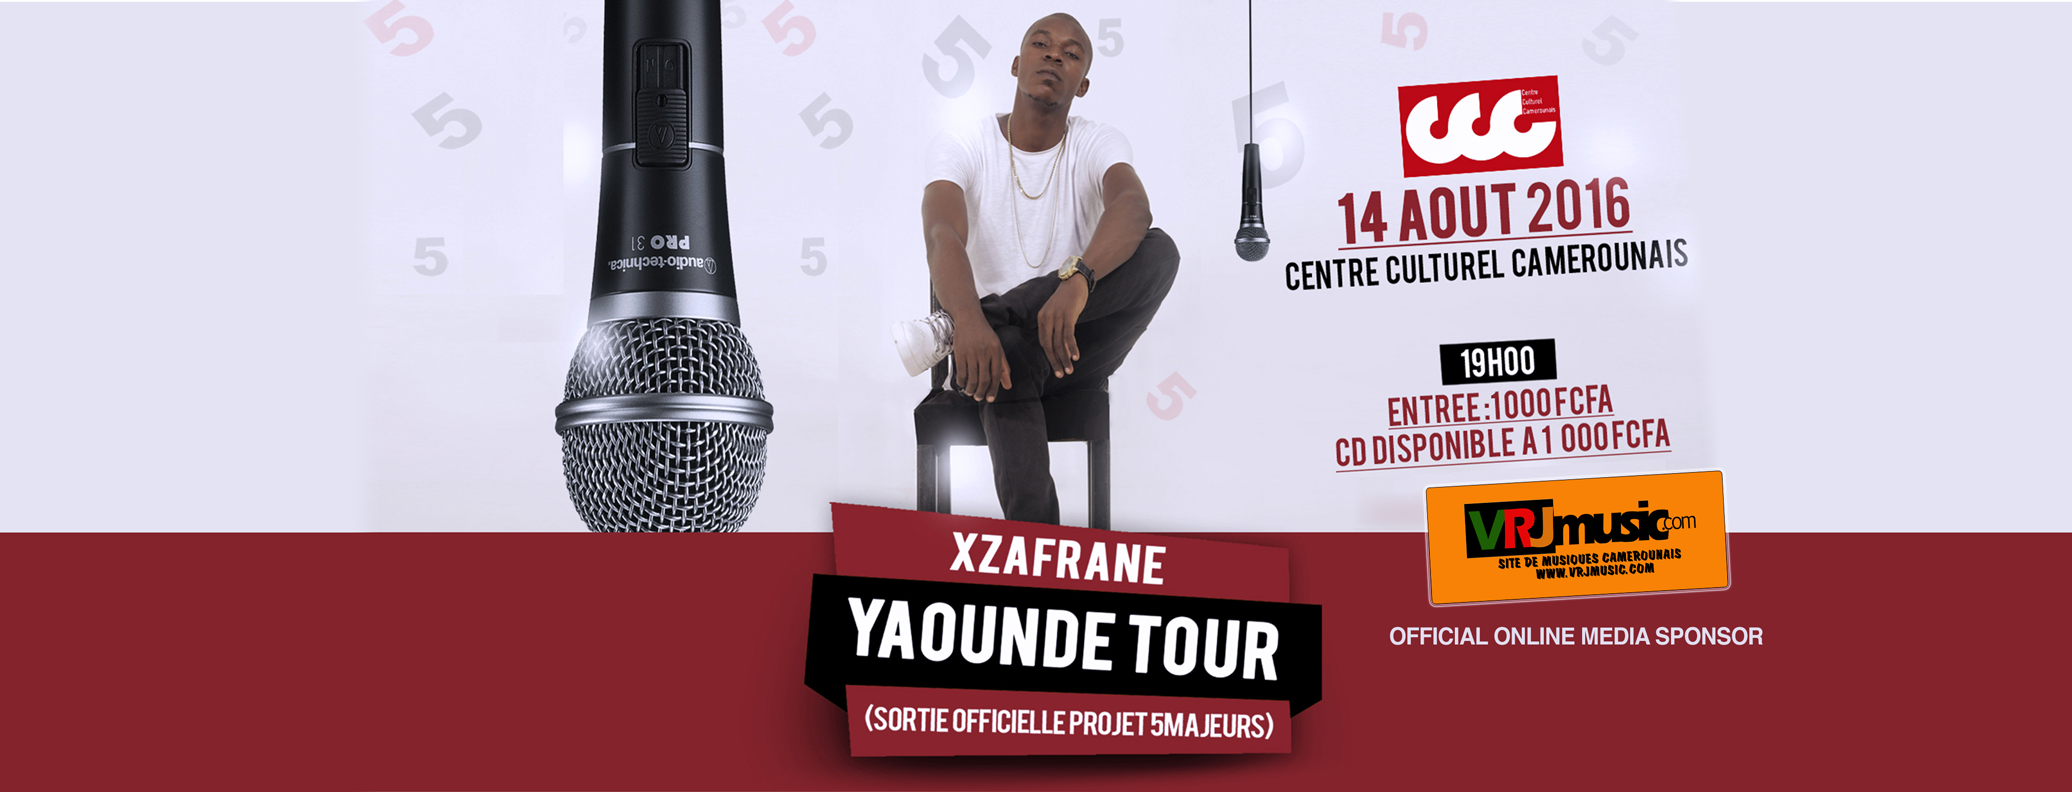 Xzafrane Yaounde Tour